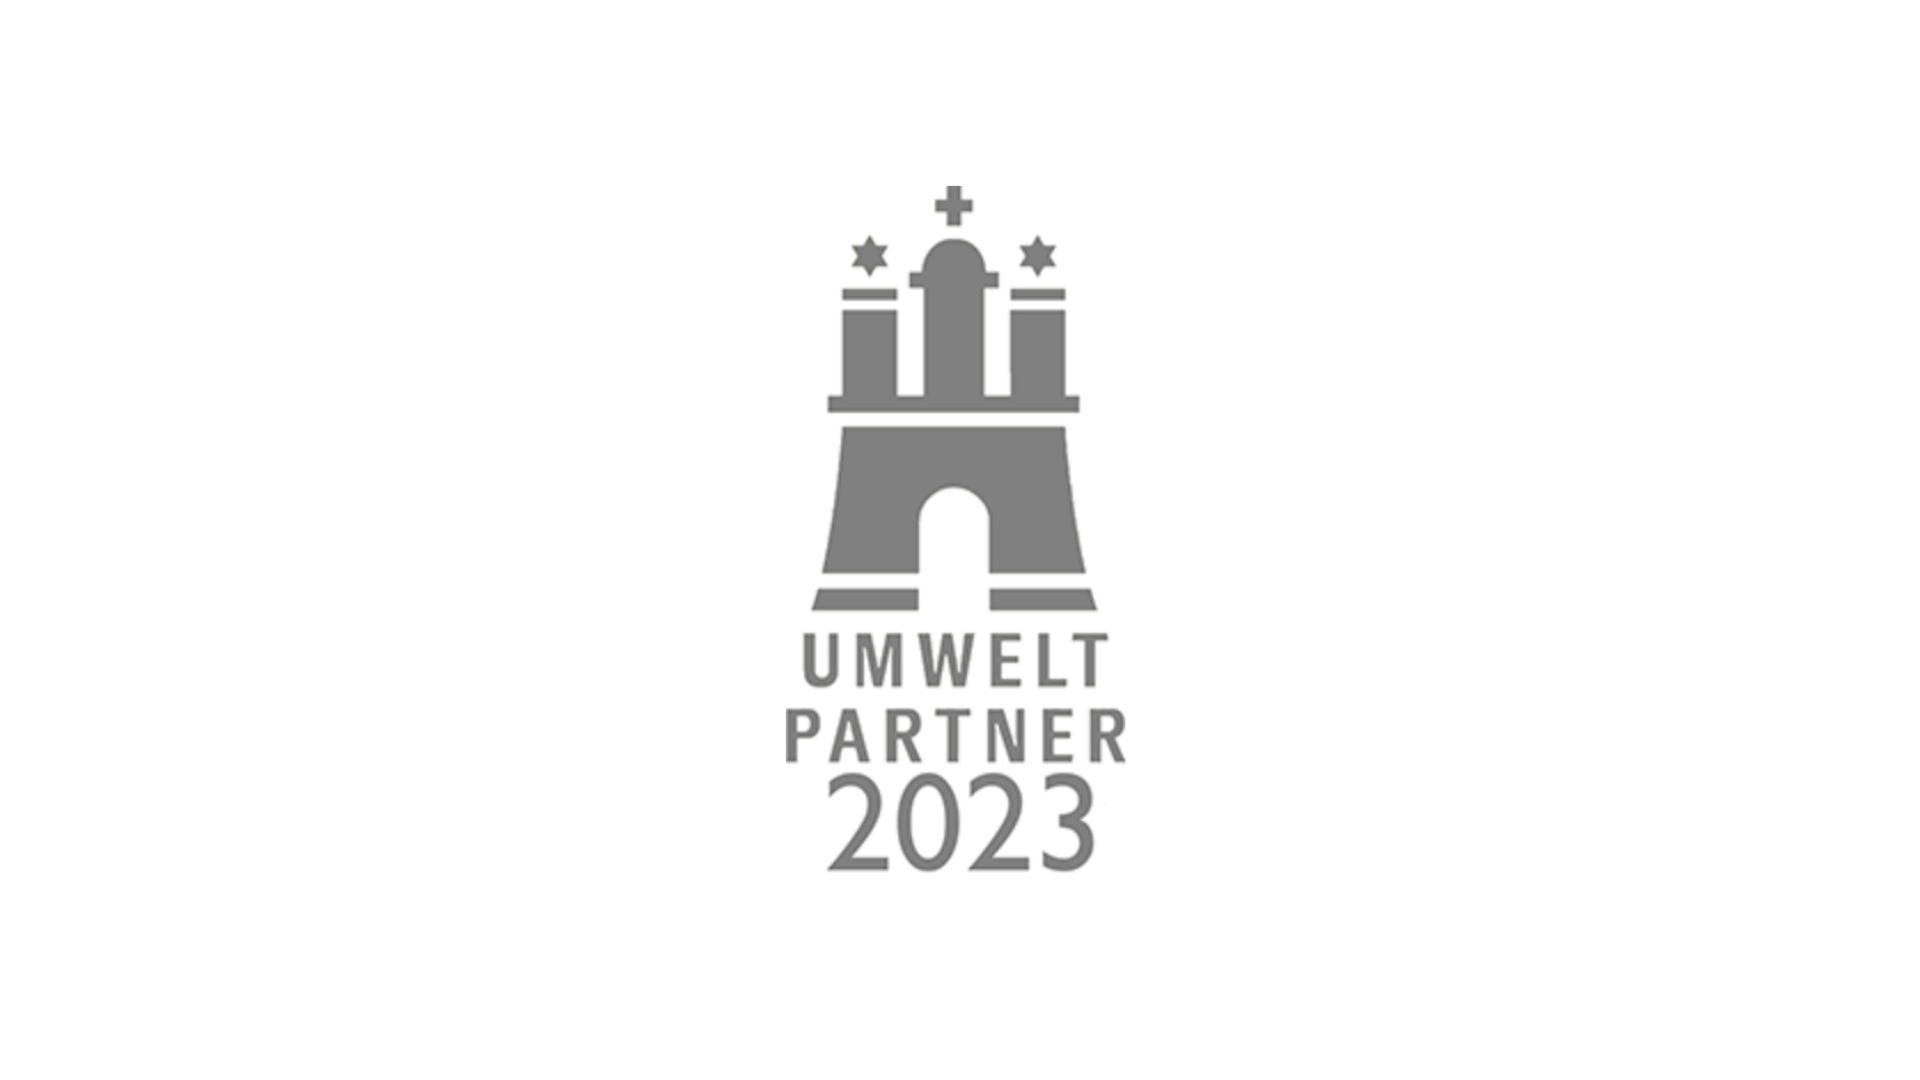 Umwelt Partner Hamburg 2023